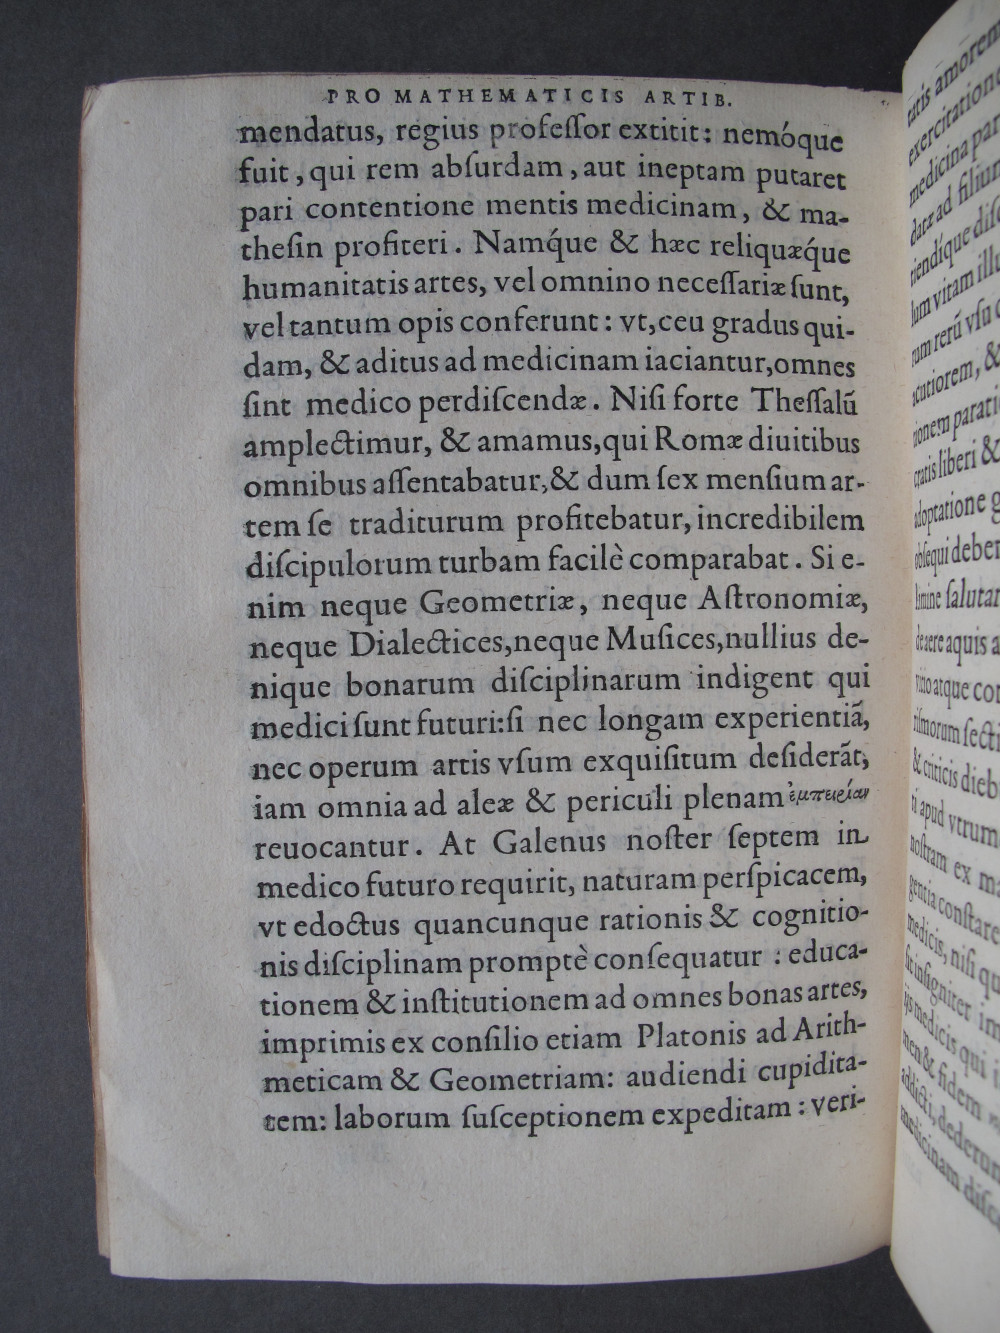 Folio 7 verso